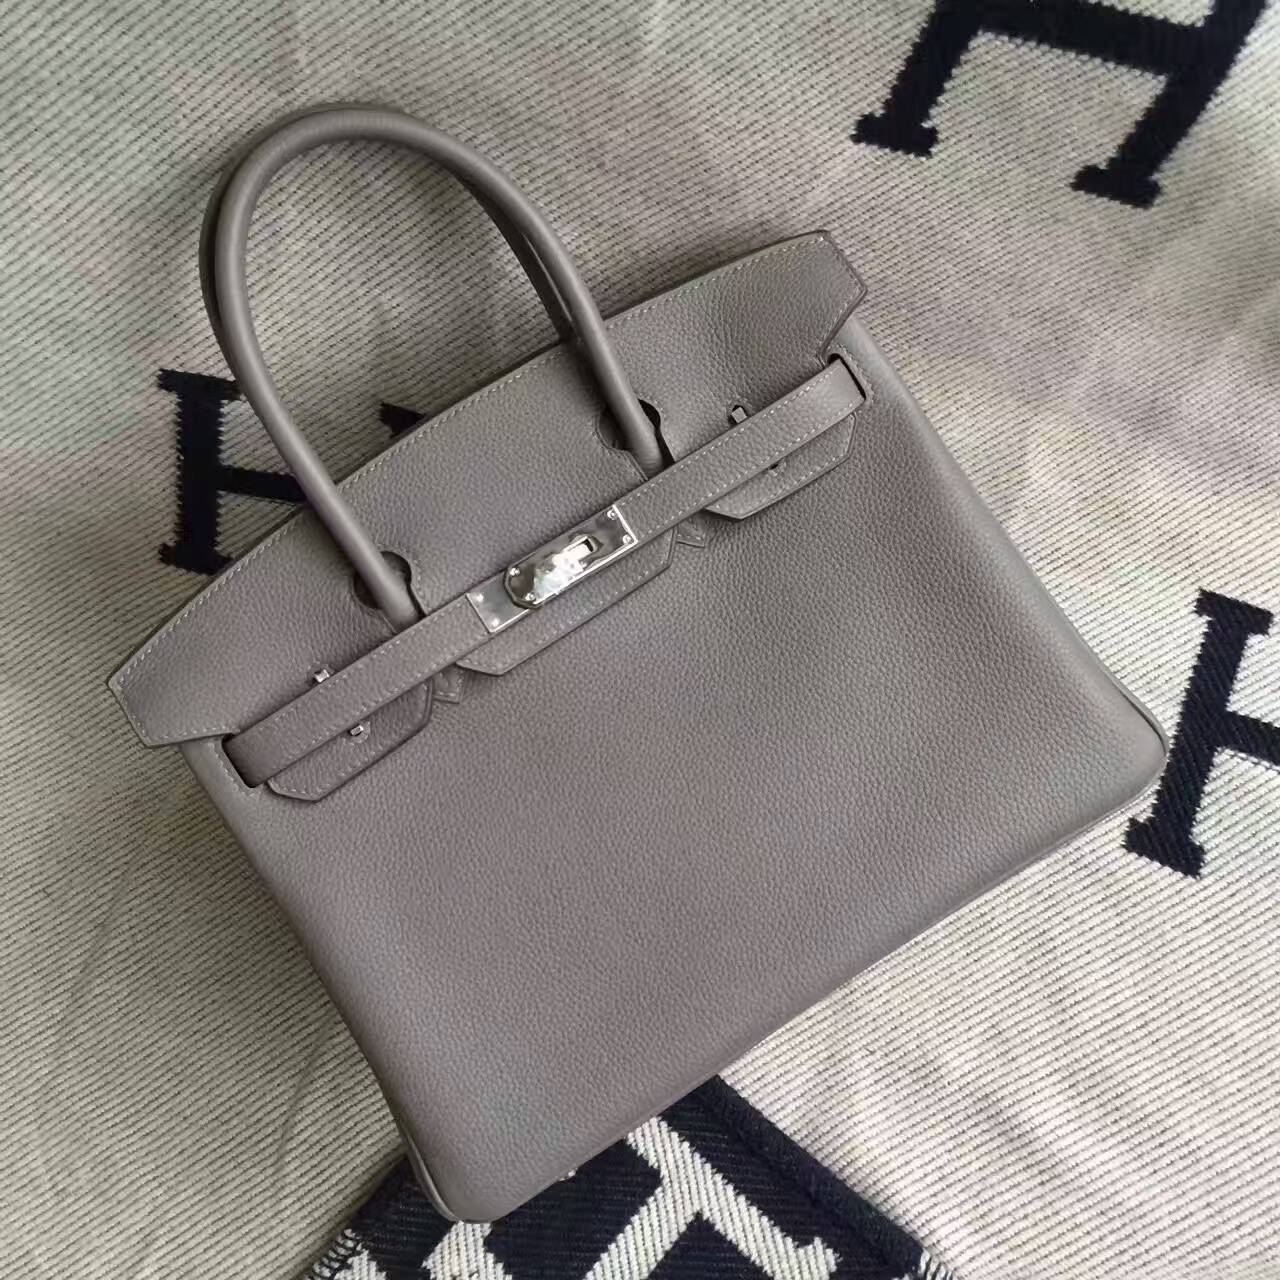 Discount Hermes 8F Etain Grey Togo Calfskin Leather Birkin Bag 30cm